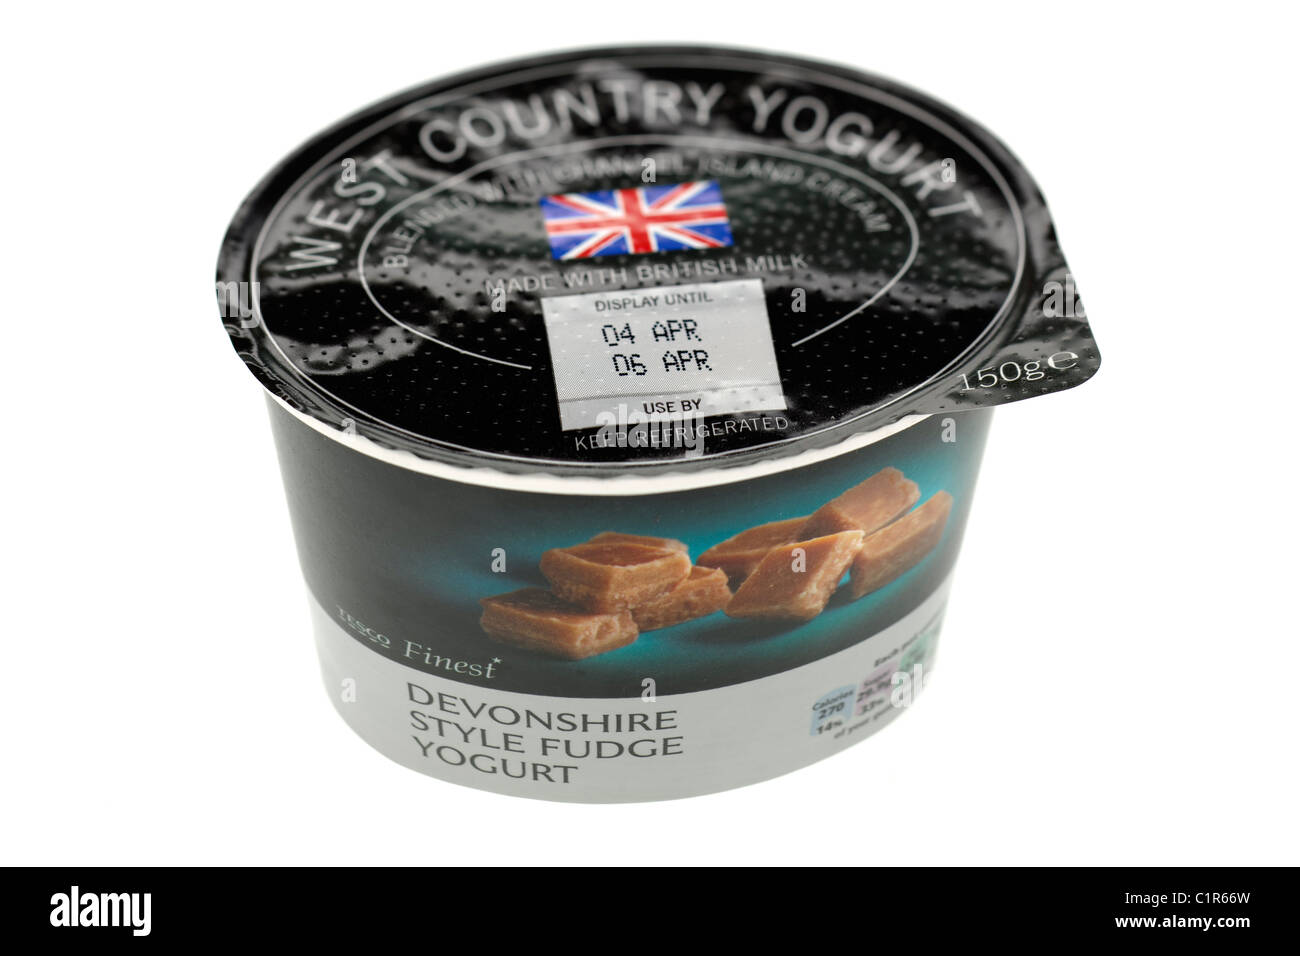 Carton of Tesco finest West Country Devonshire style fudge Yogurt made with British milk Stock Photo